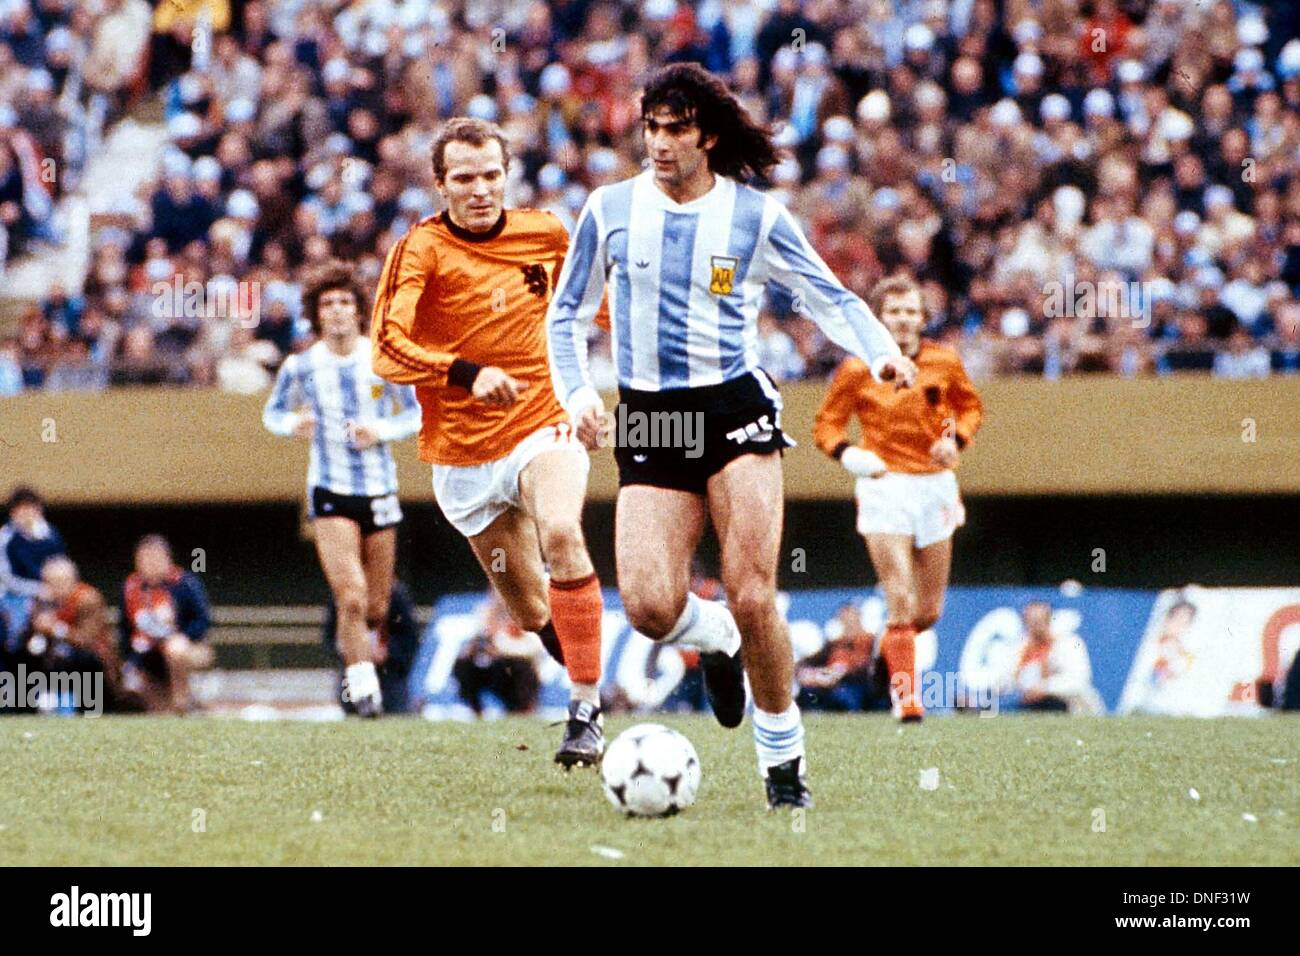 25.06.1978 Buenos Aires Argentina. Mario Kempes (Argentina) sfidato da Willy van de Kerkhof (Olanda) Coppa del mondo 1978. L'Argentina contro l'Olanda terminò 3:1, contro l'Argentina Foto Stock